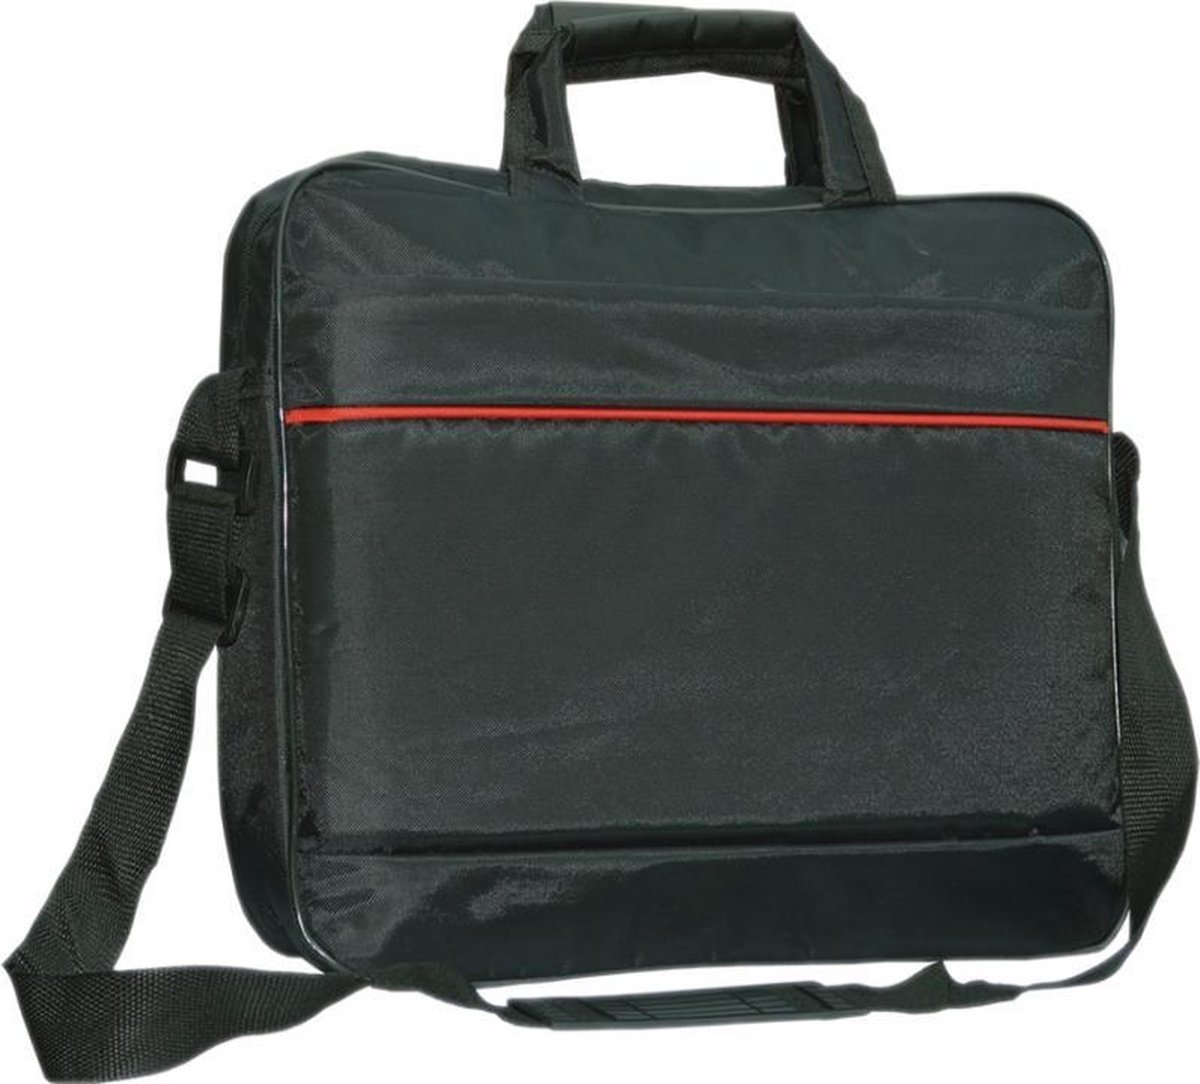 Samsung Ativ Book 9 13.3 Inch laptoptas messenger bag / schoudertas / tas , zwart , merk i12Cover